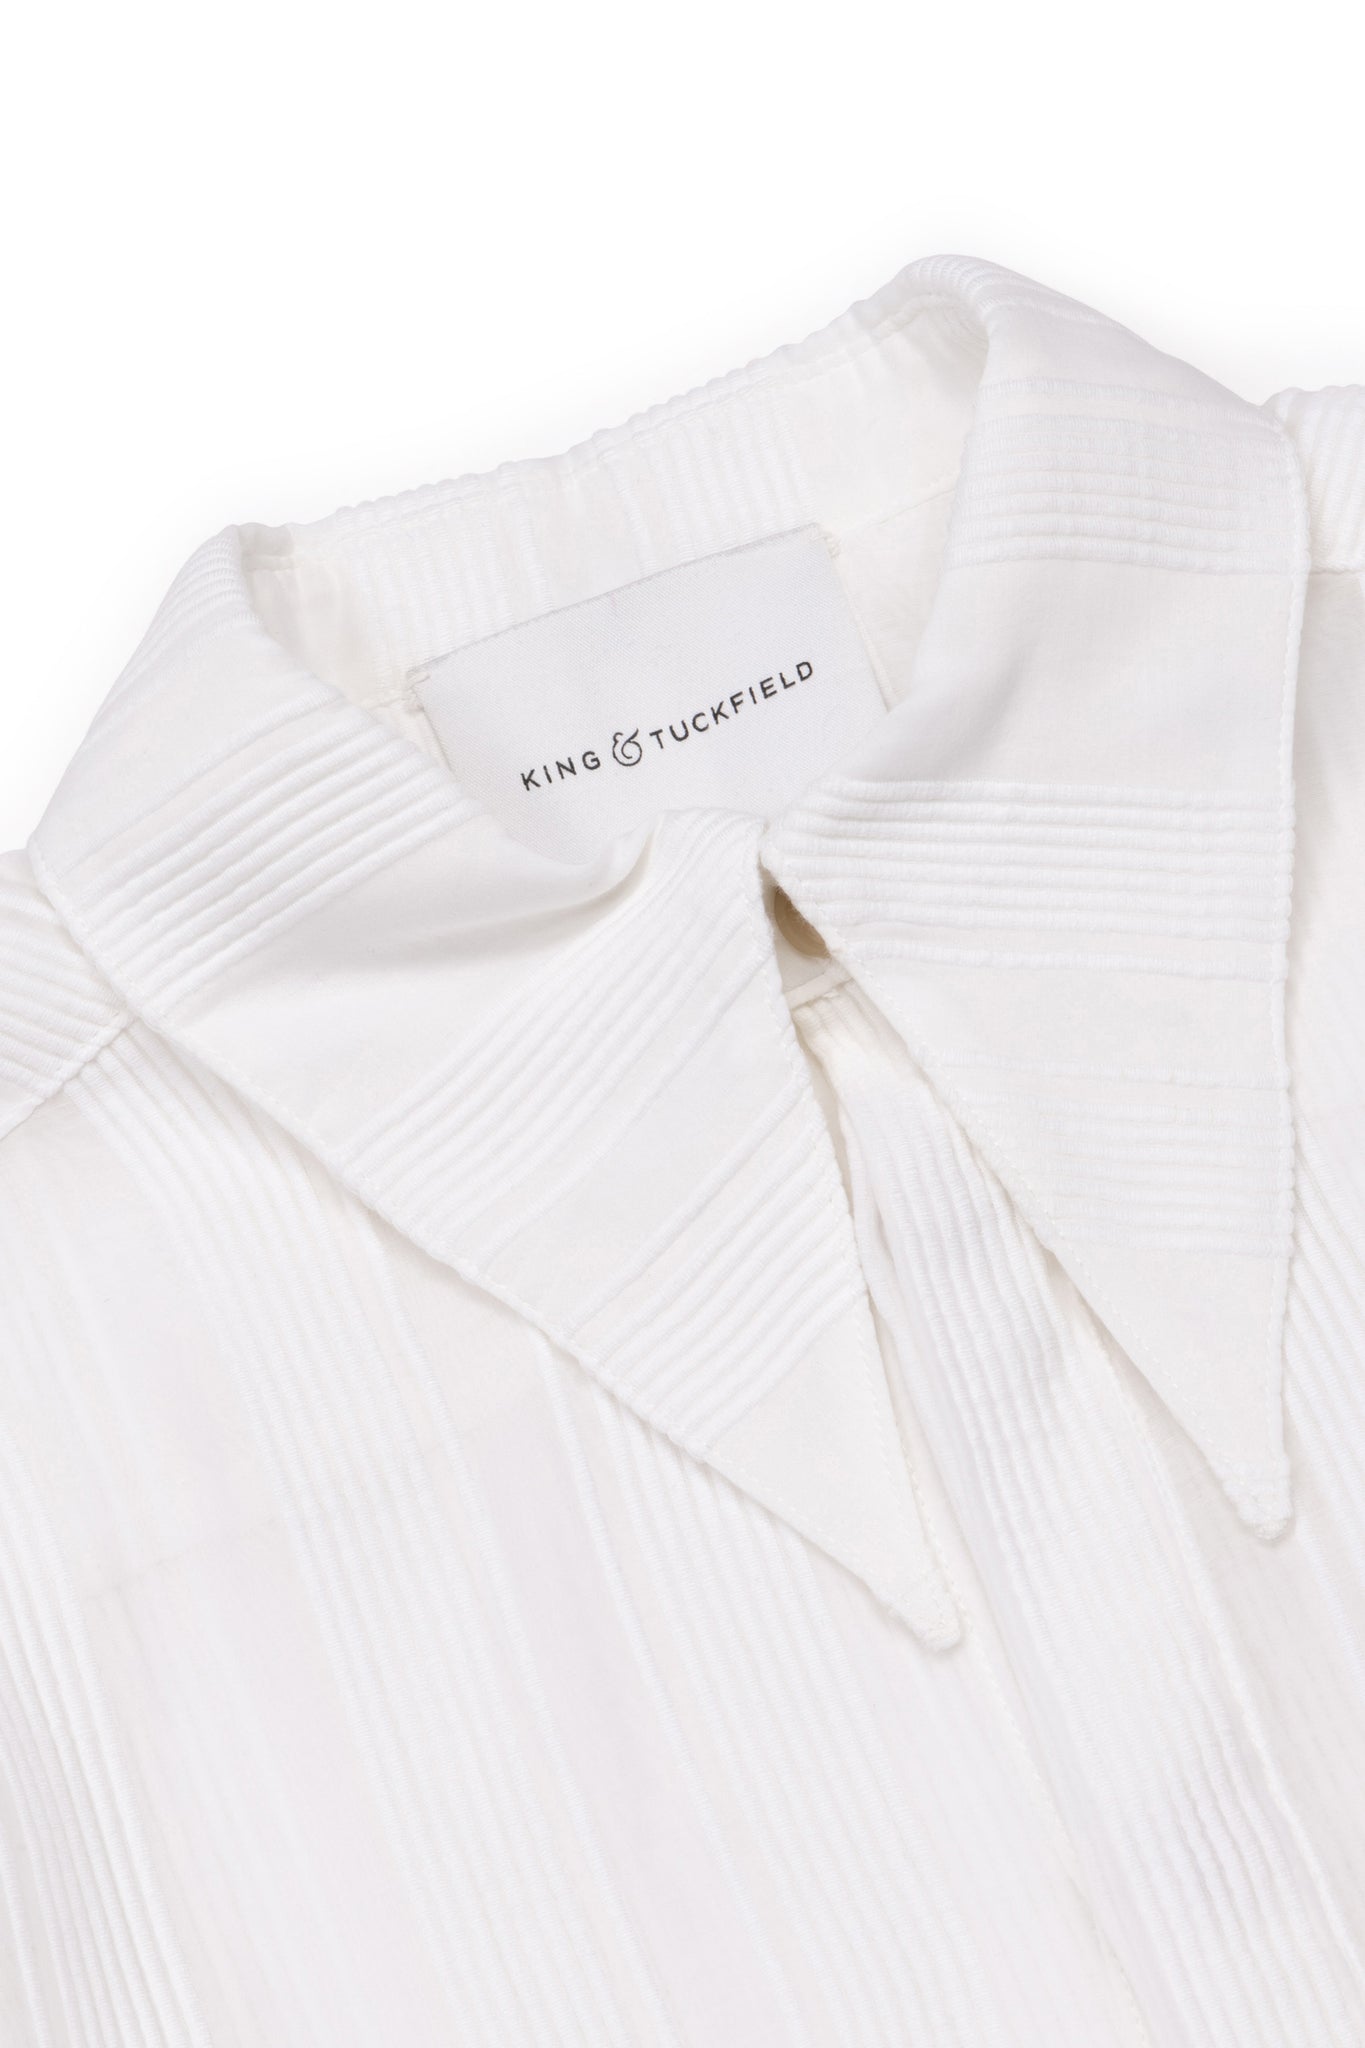 Pointed-Collar Longline Shirt